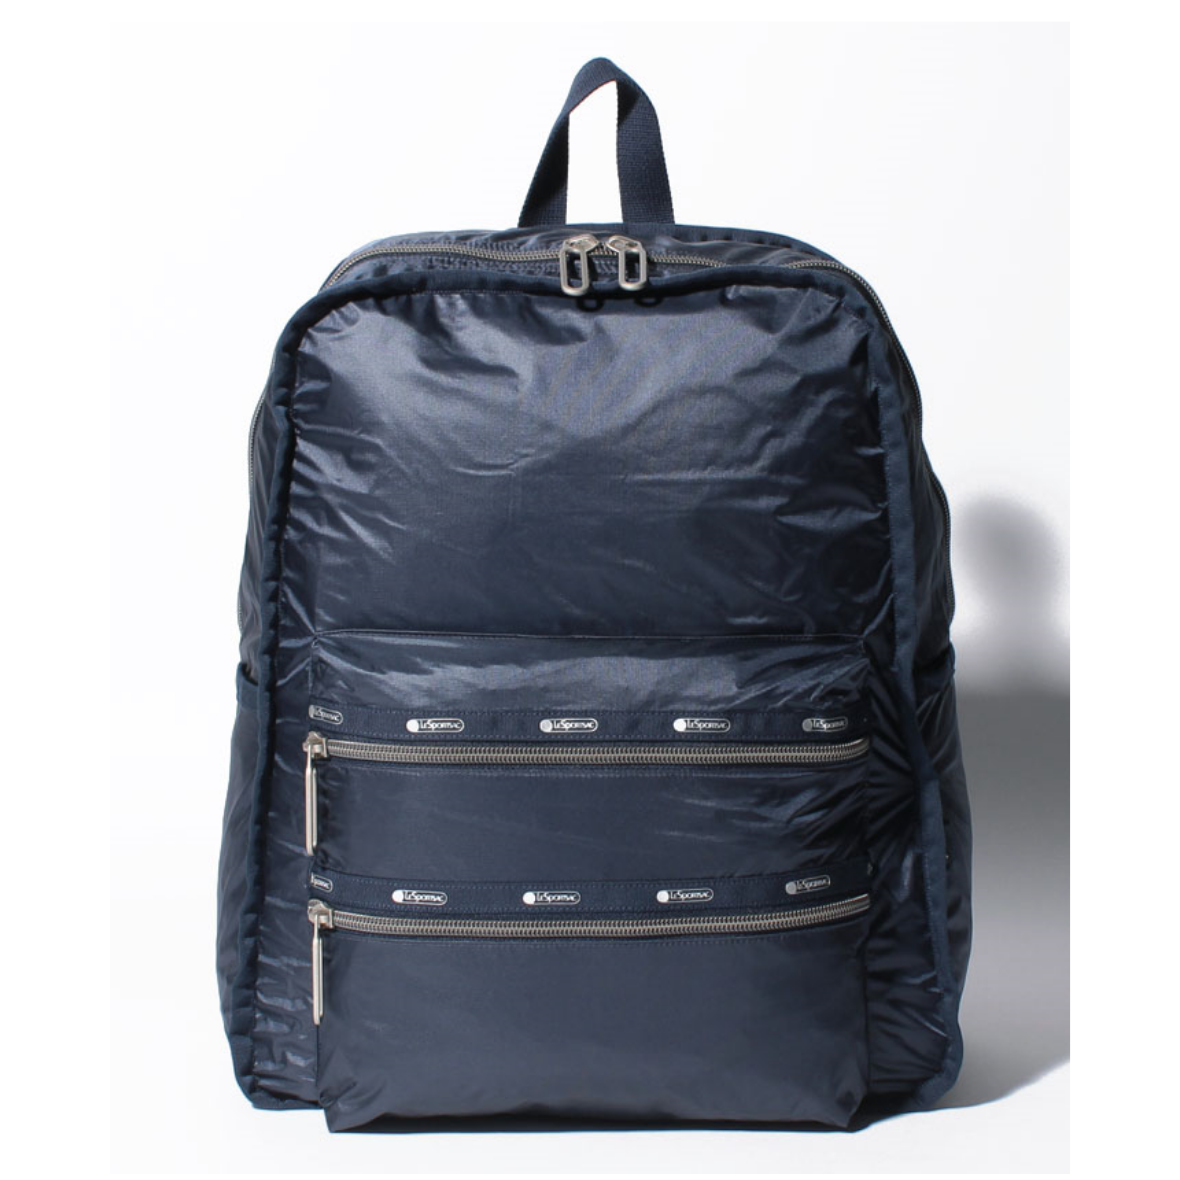 summerActive-item_backpack_02